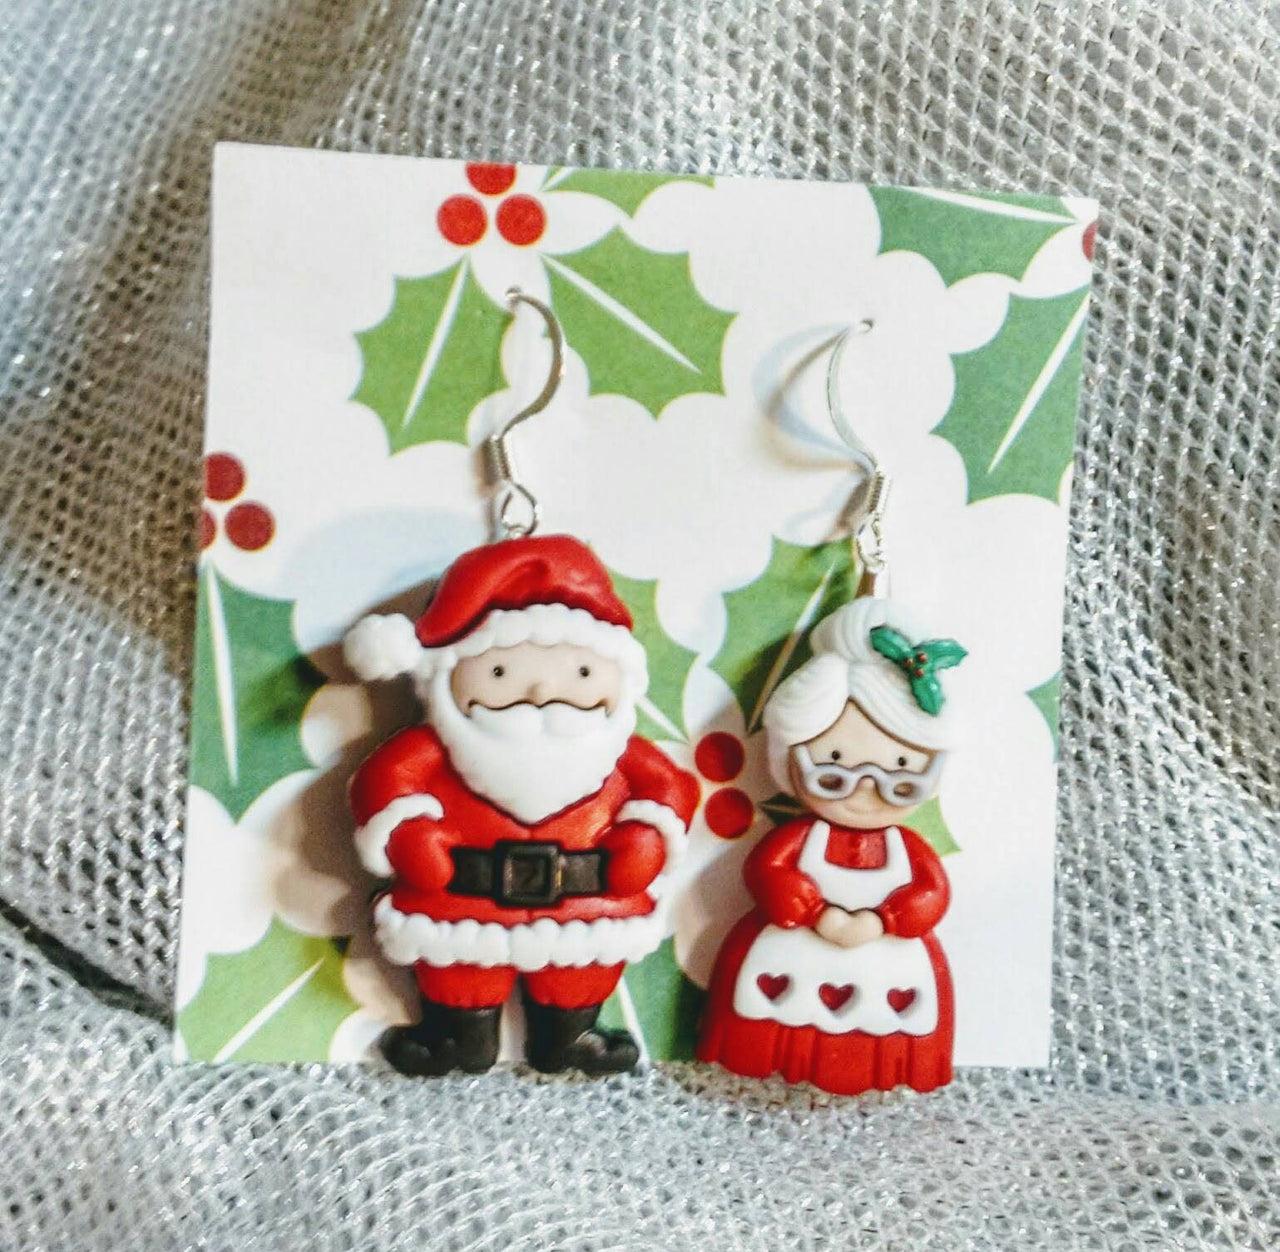 Santa Clause earrings, Christmas earrings, Santa Clause jewelry, Mrs. Clause jewelry, Mrs. Clause earrings, teacher jewelry, gifts under 10